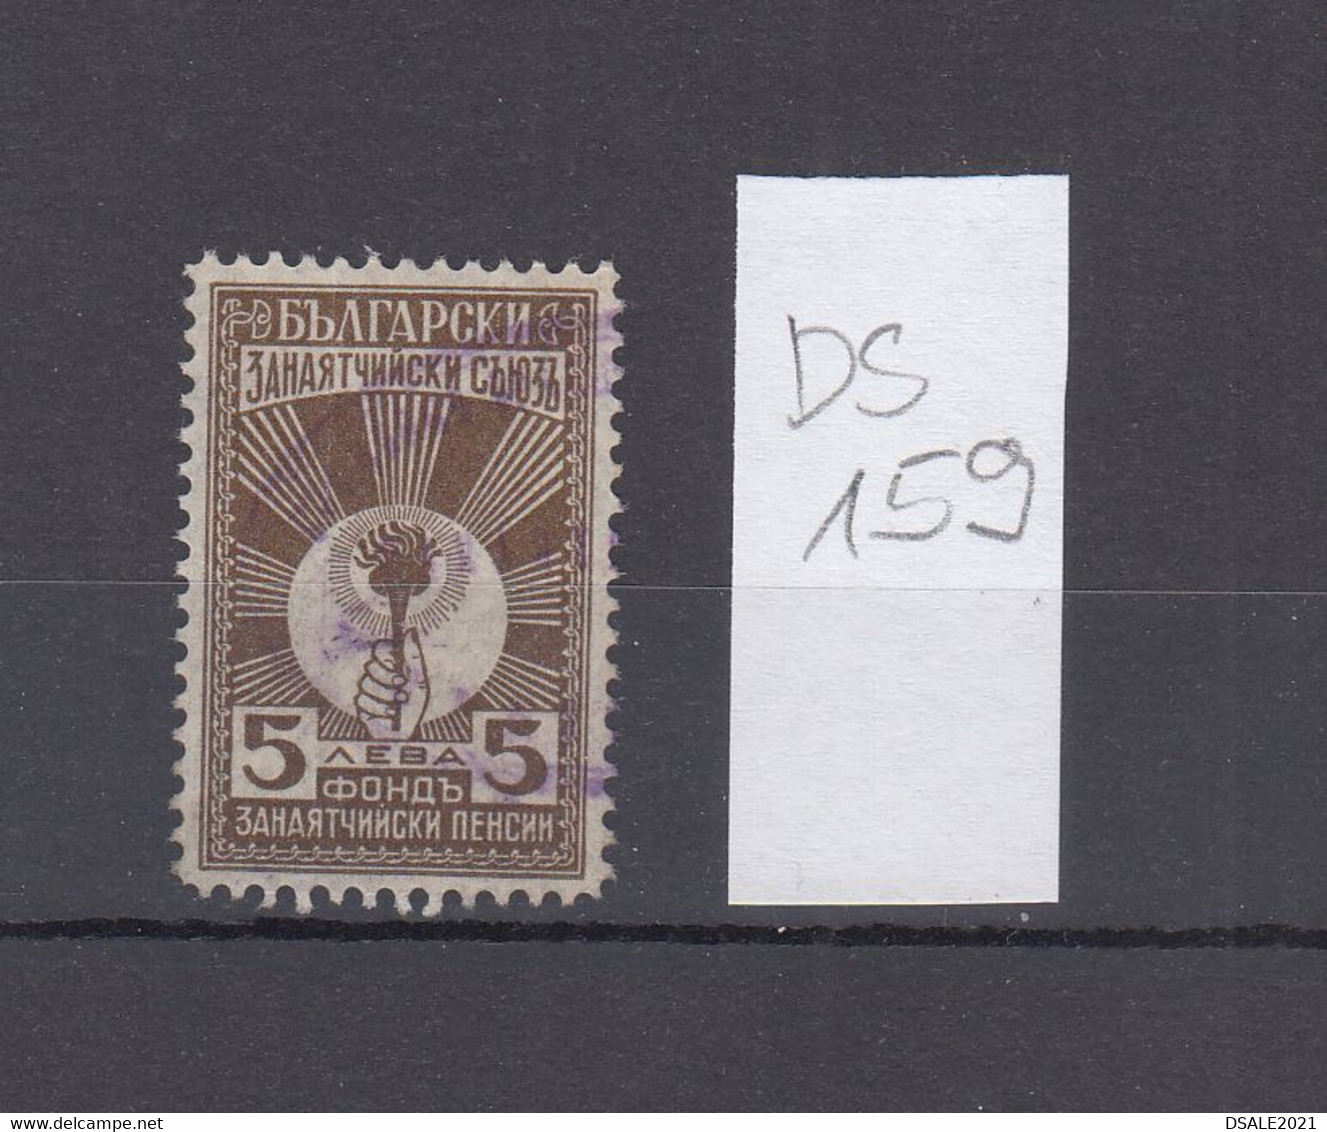 Bulgaria Bulgarie Bulgarije 1930s Craftsman Society 5Lv. Pension Fund Fiscal Revenue Stamp Bulgarian Revenues (ds159) - Timbres De Service